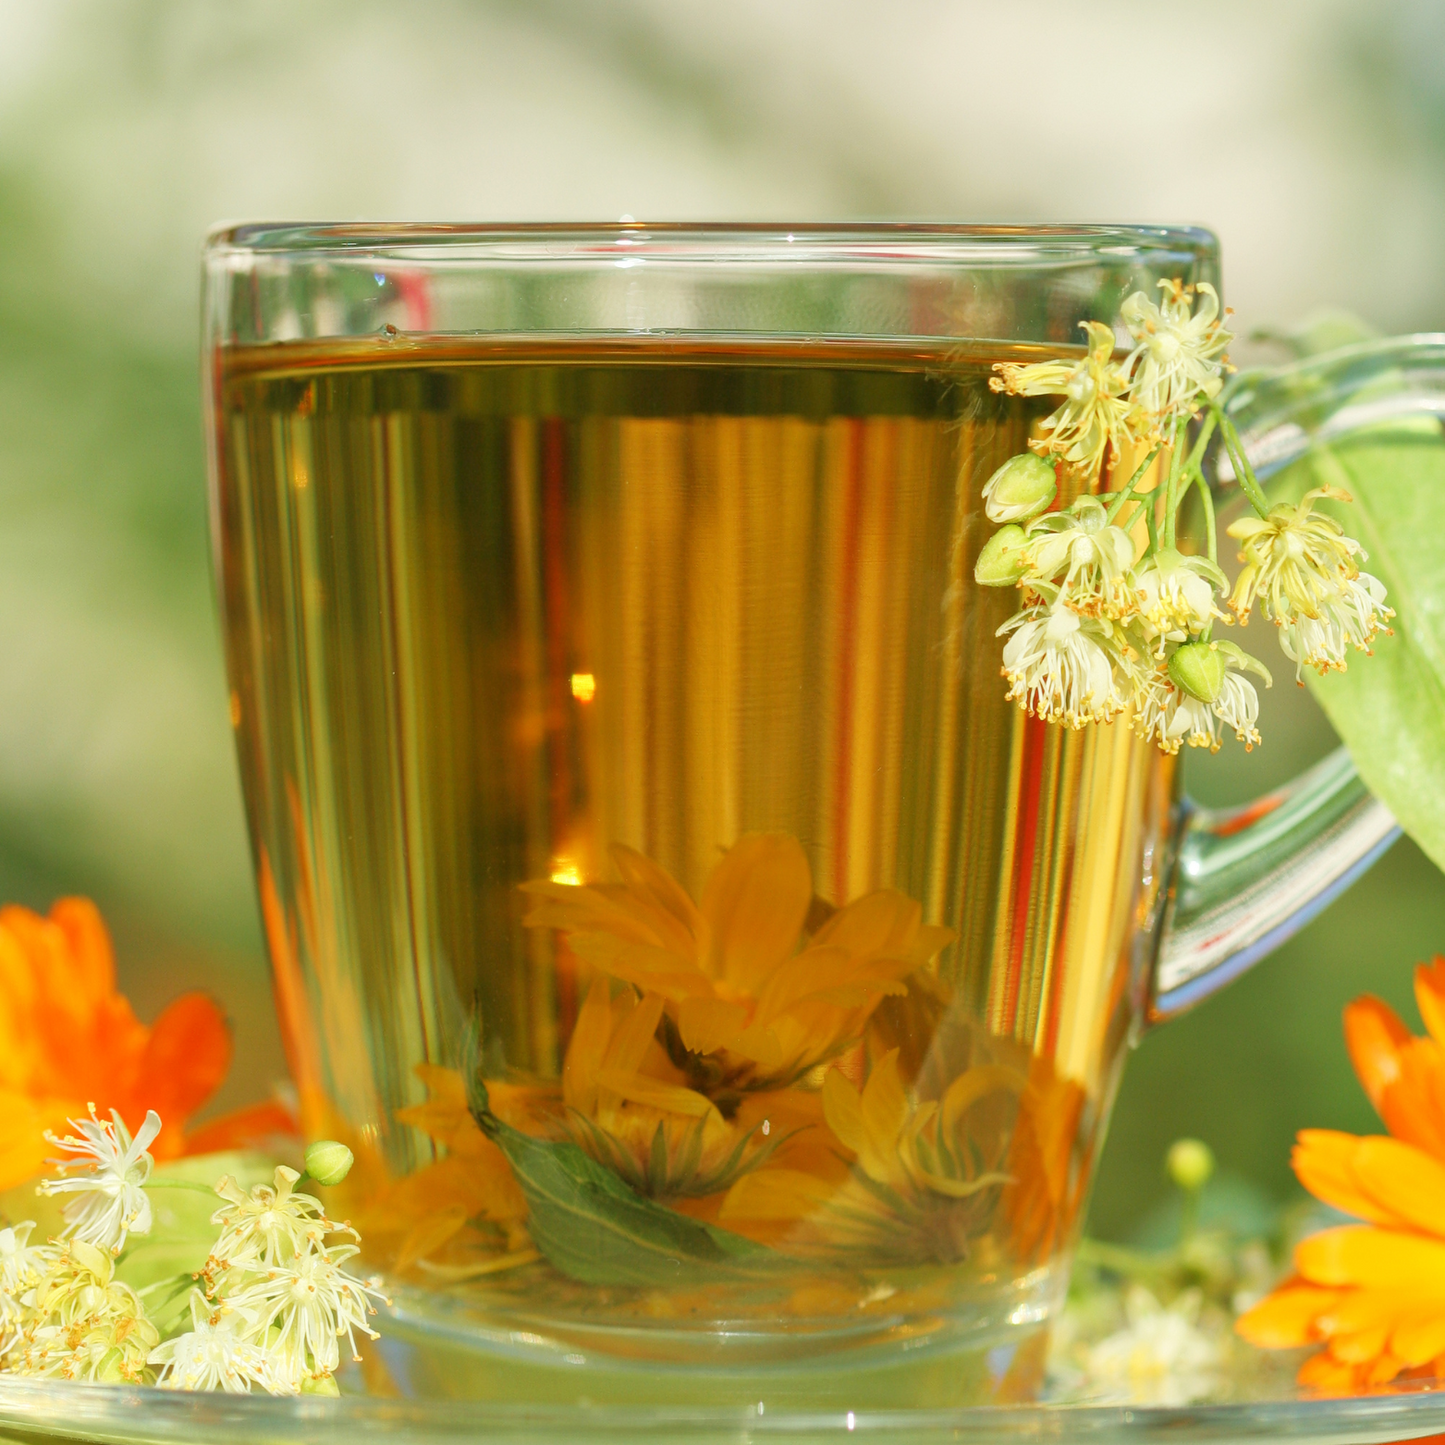 Witchy Pooh's Marigold Flower Petal Loose Leaf Calendula Herbal Tea For Wealth Rituals, Caffeine Free